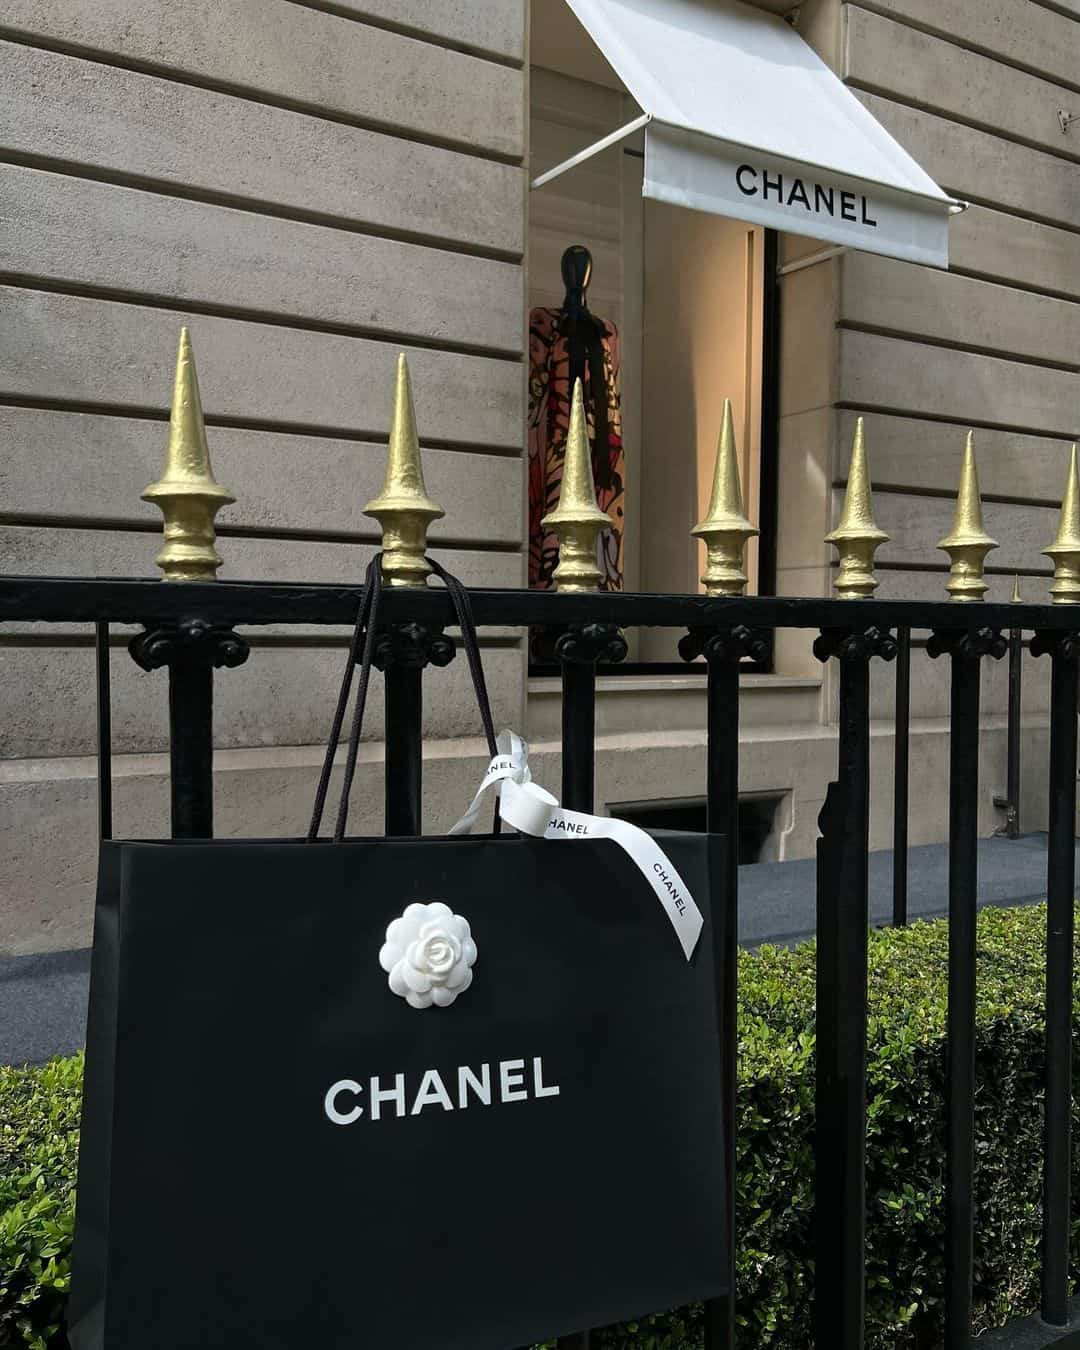 Chanel Bags are cheaper in Paris